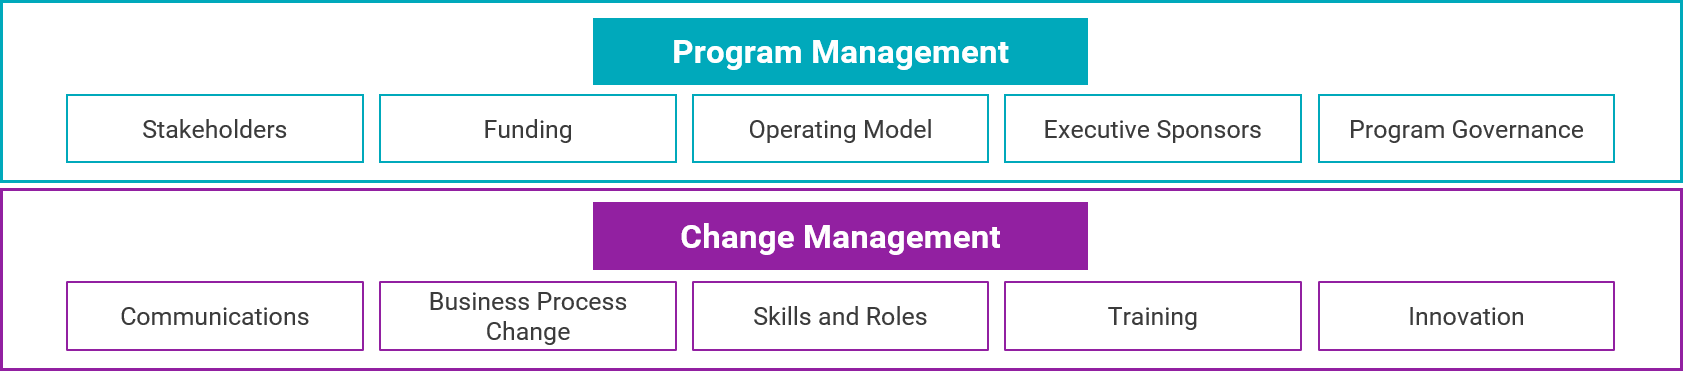 Program Change management